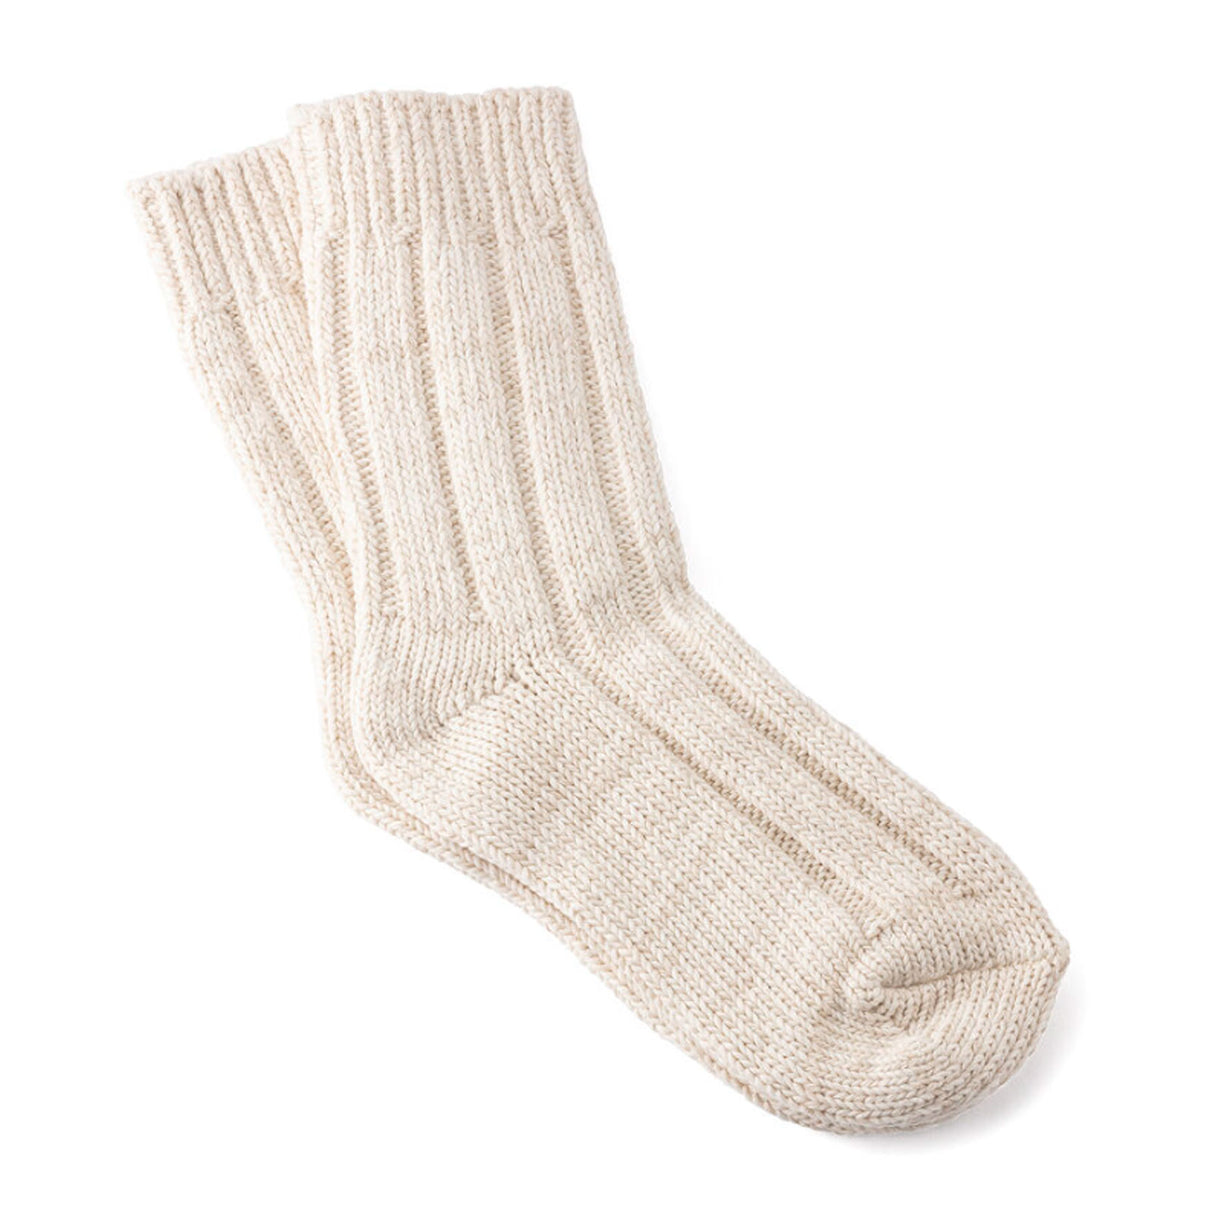 Birkenstock Cotton Twist Crew Sock (Unisex) - Off White Accessories - Socks - Lifestyle - The Heel Shoe Fitters